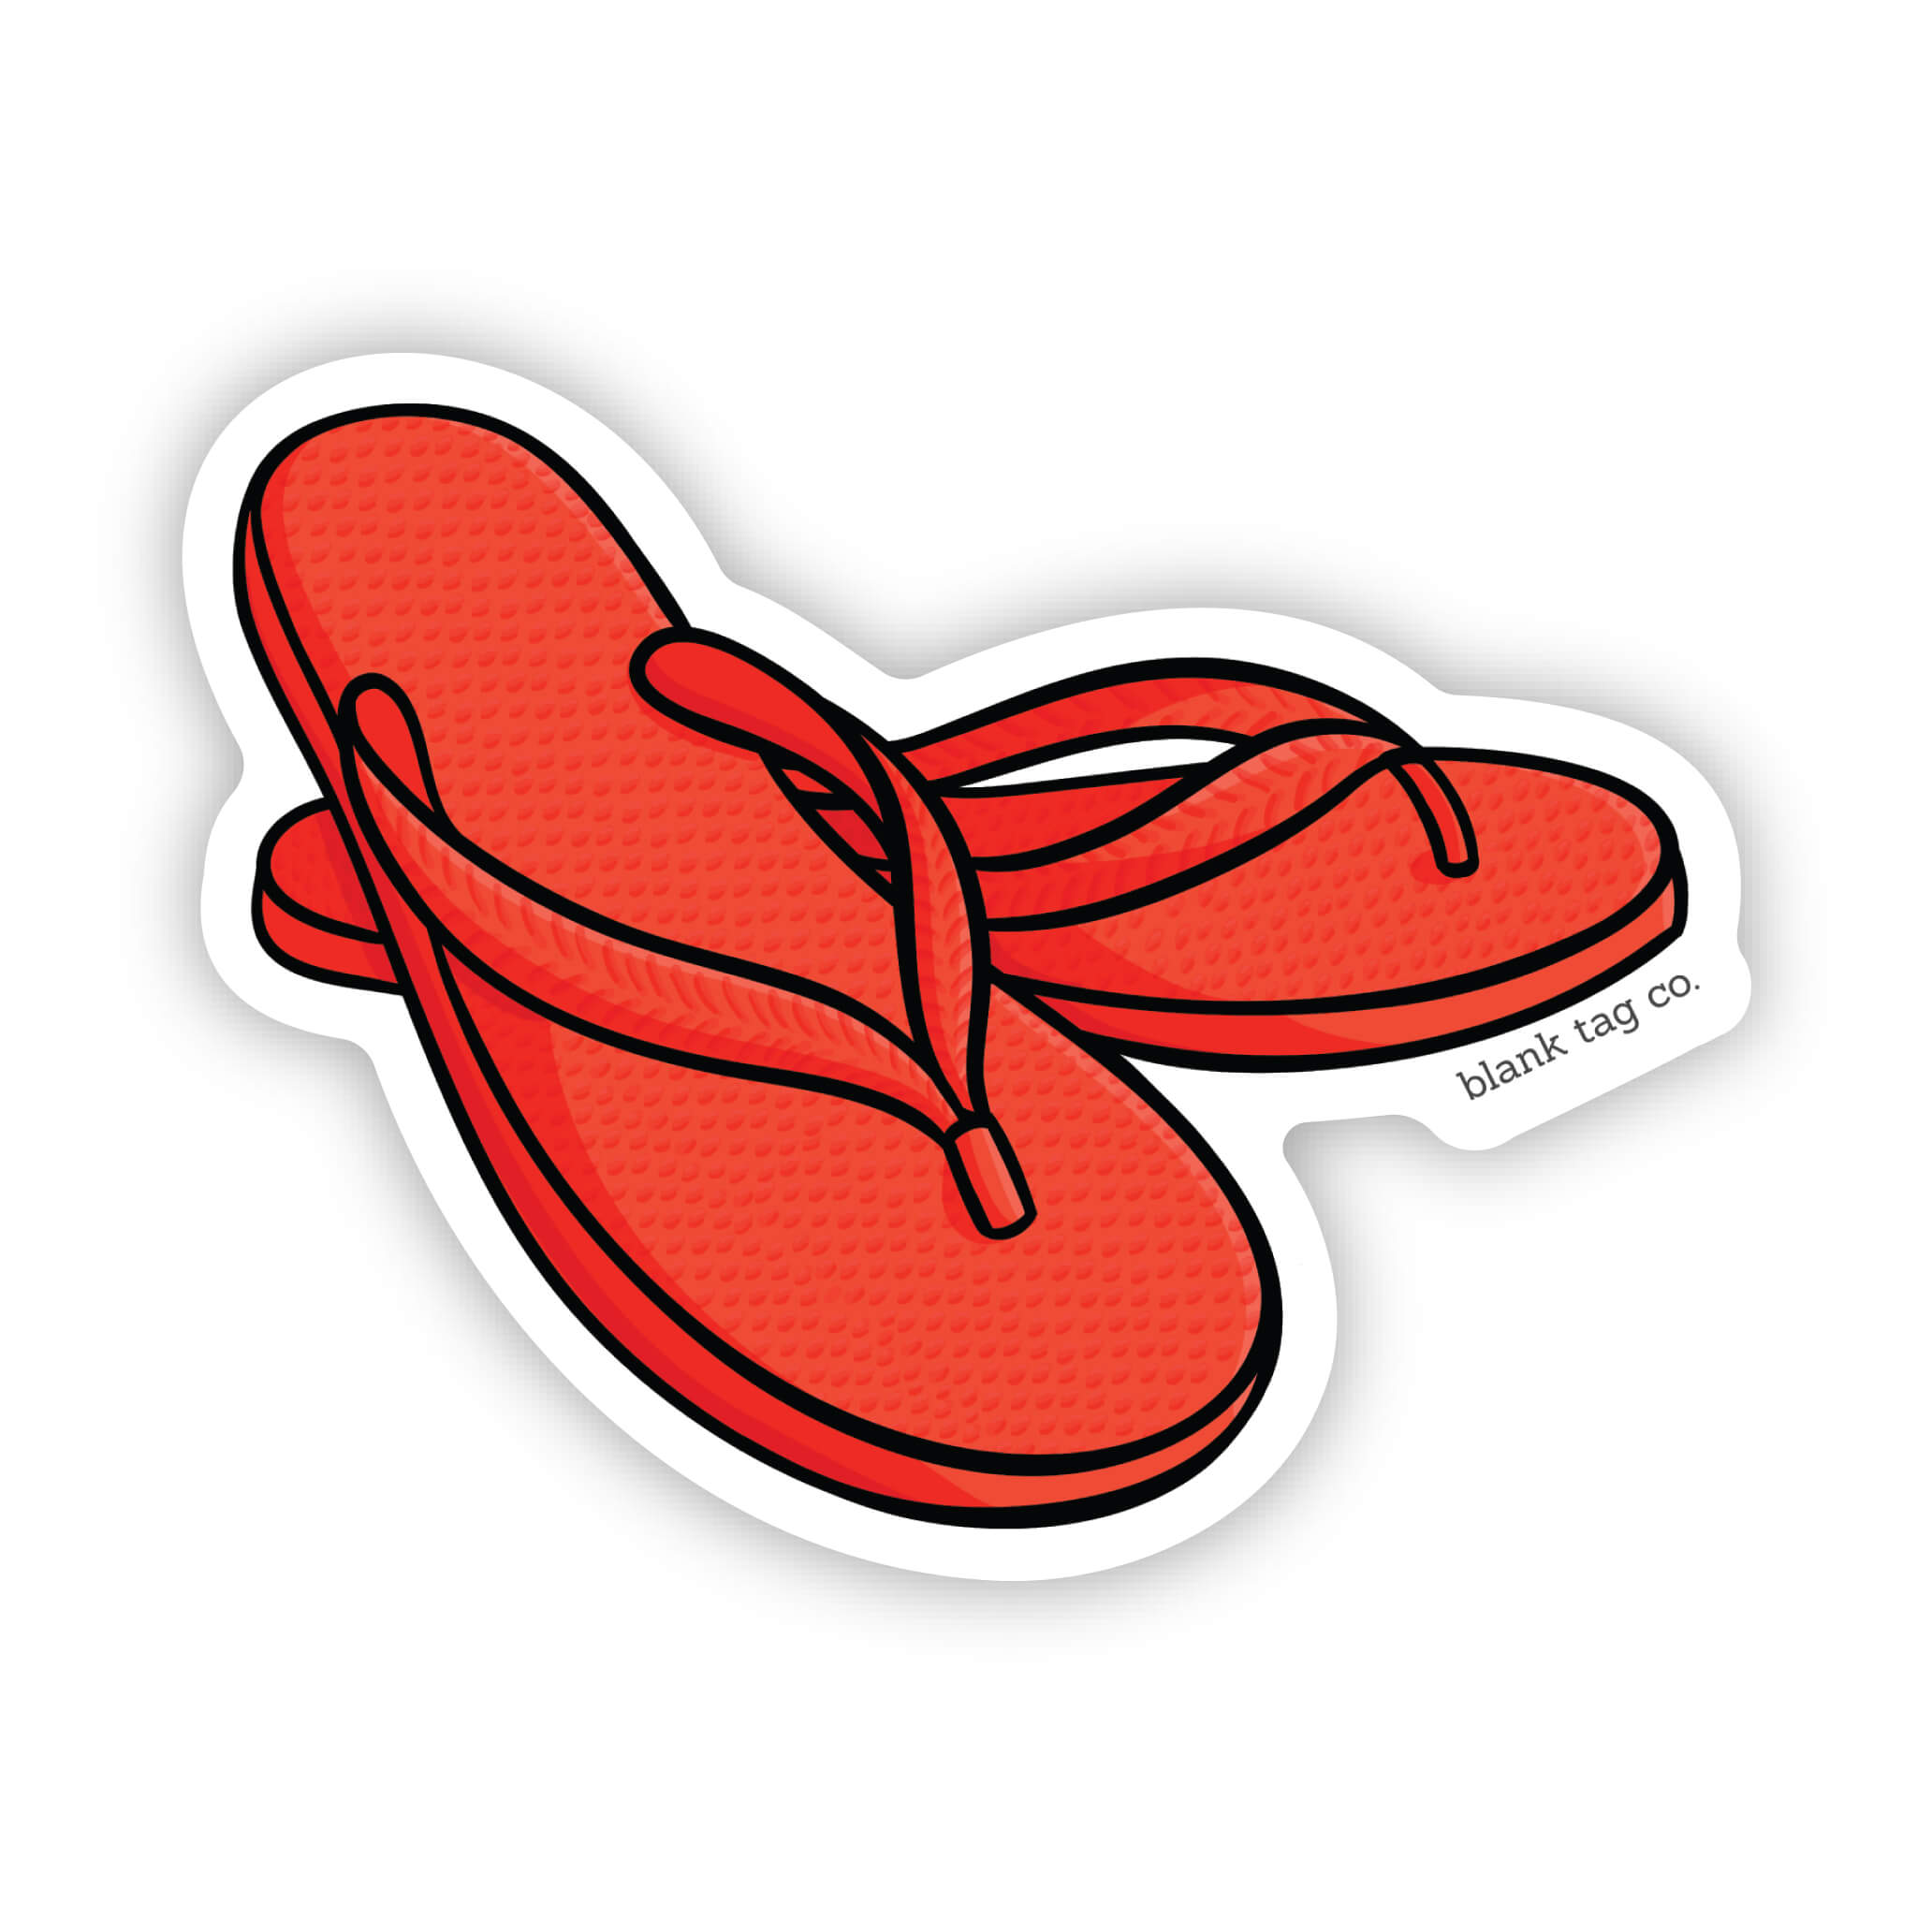 The Flip Flops Sticker